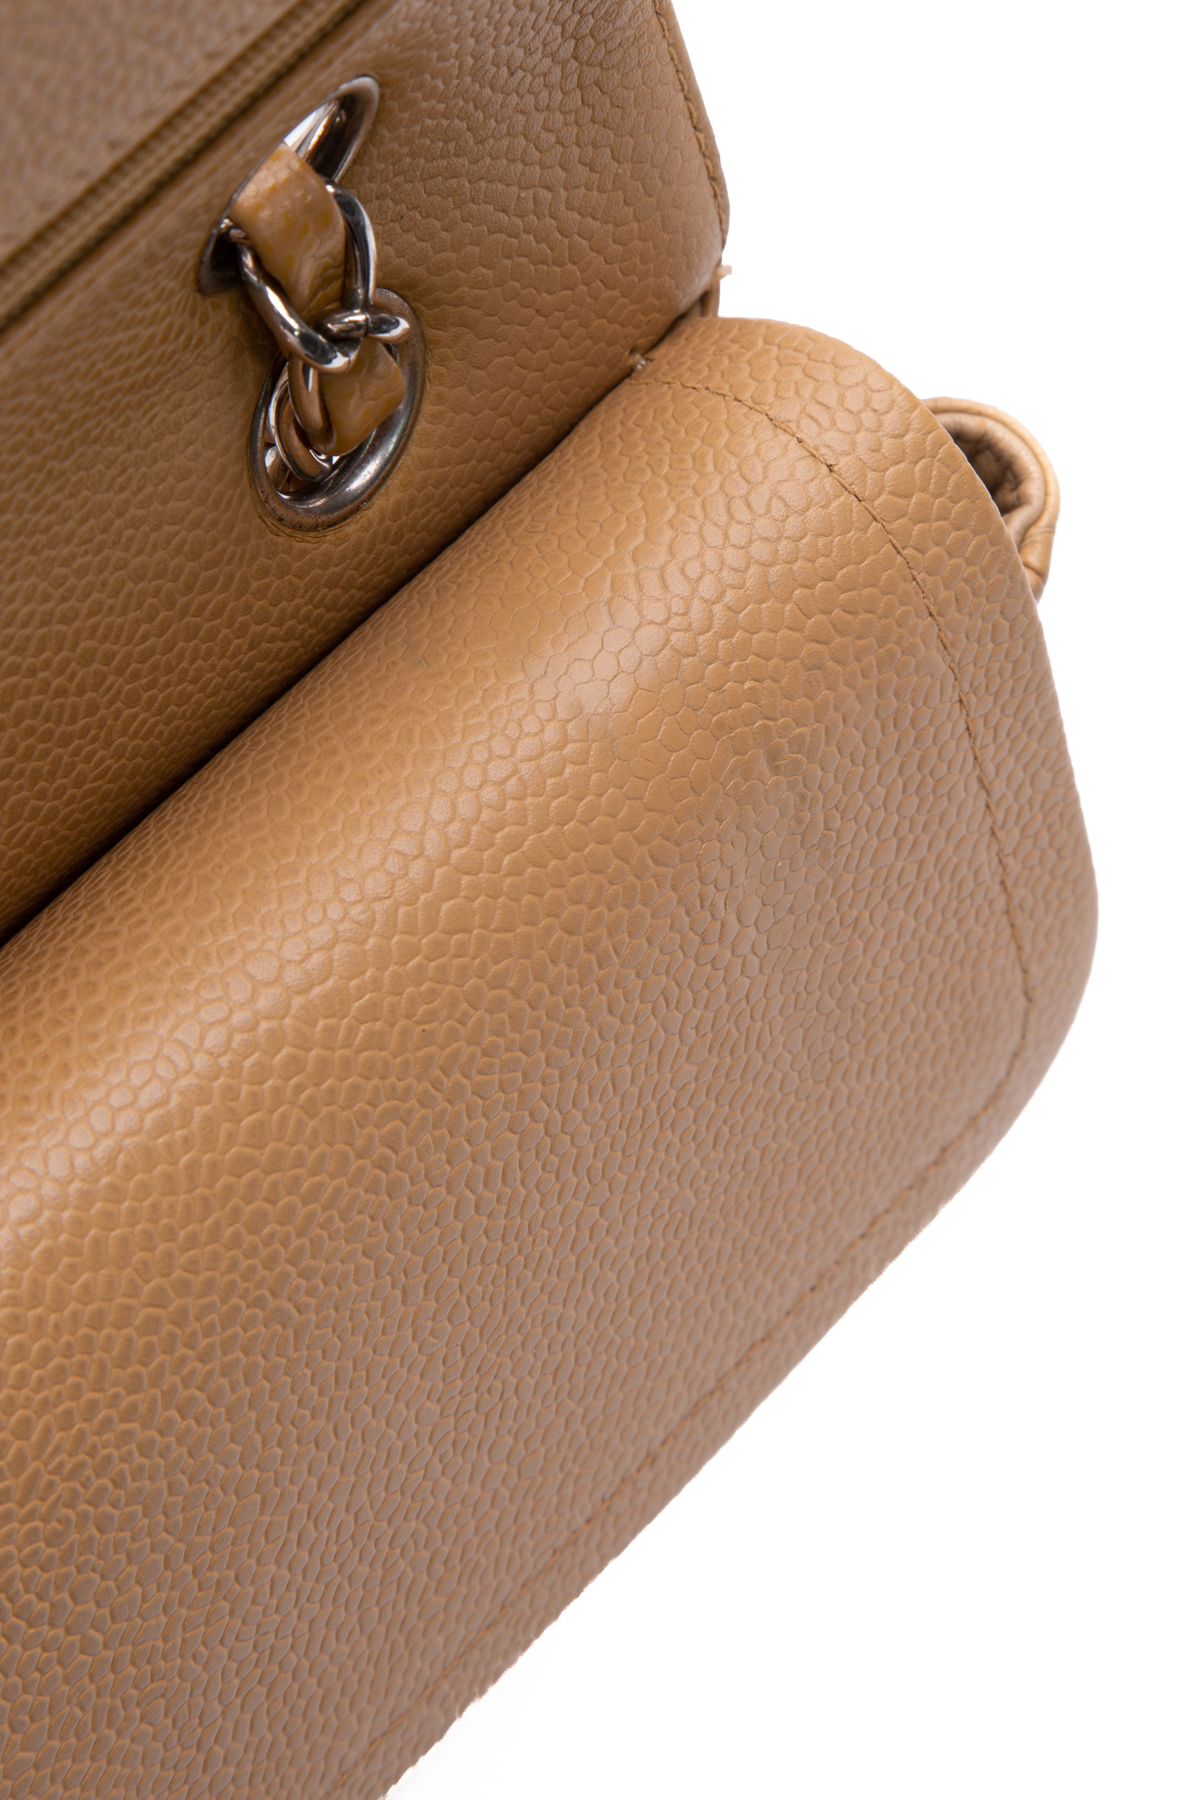 NEW CHANEL CAMEL CAVIAR FLAP BUSINESS AFFINITY BAG CAVIAR GOLD SHOULDER BAG